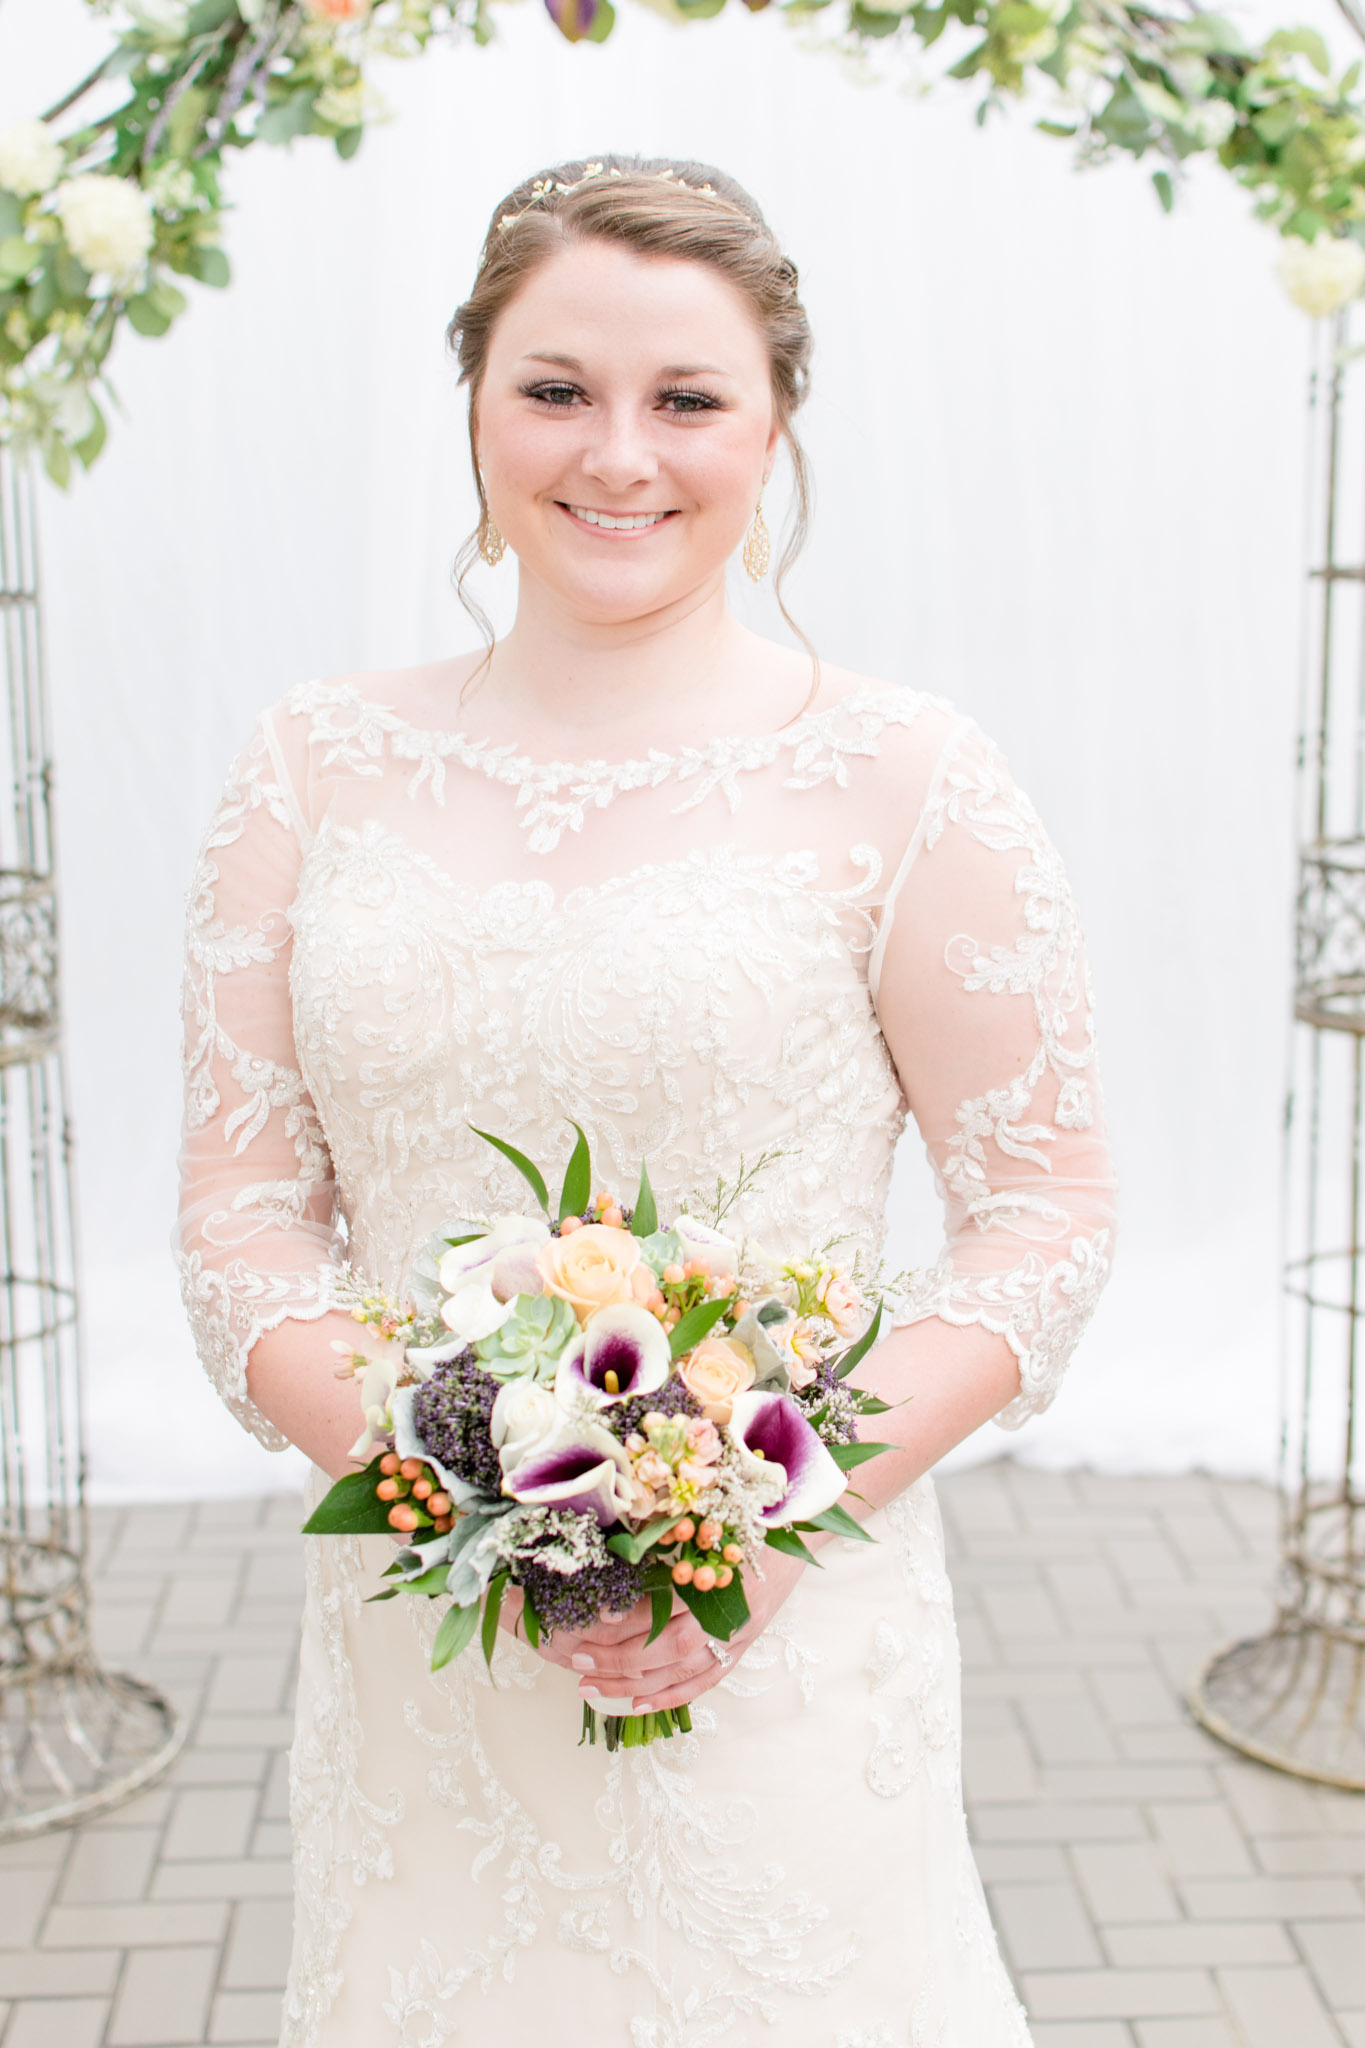 Indianapolis Bride smiles during photos